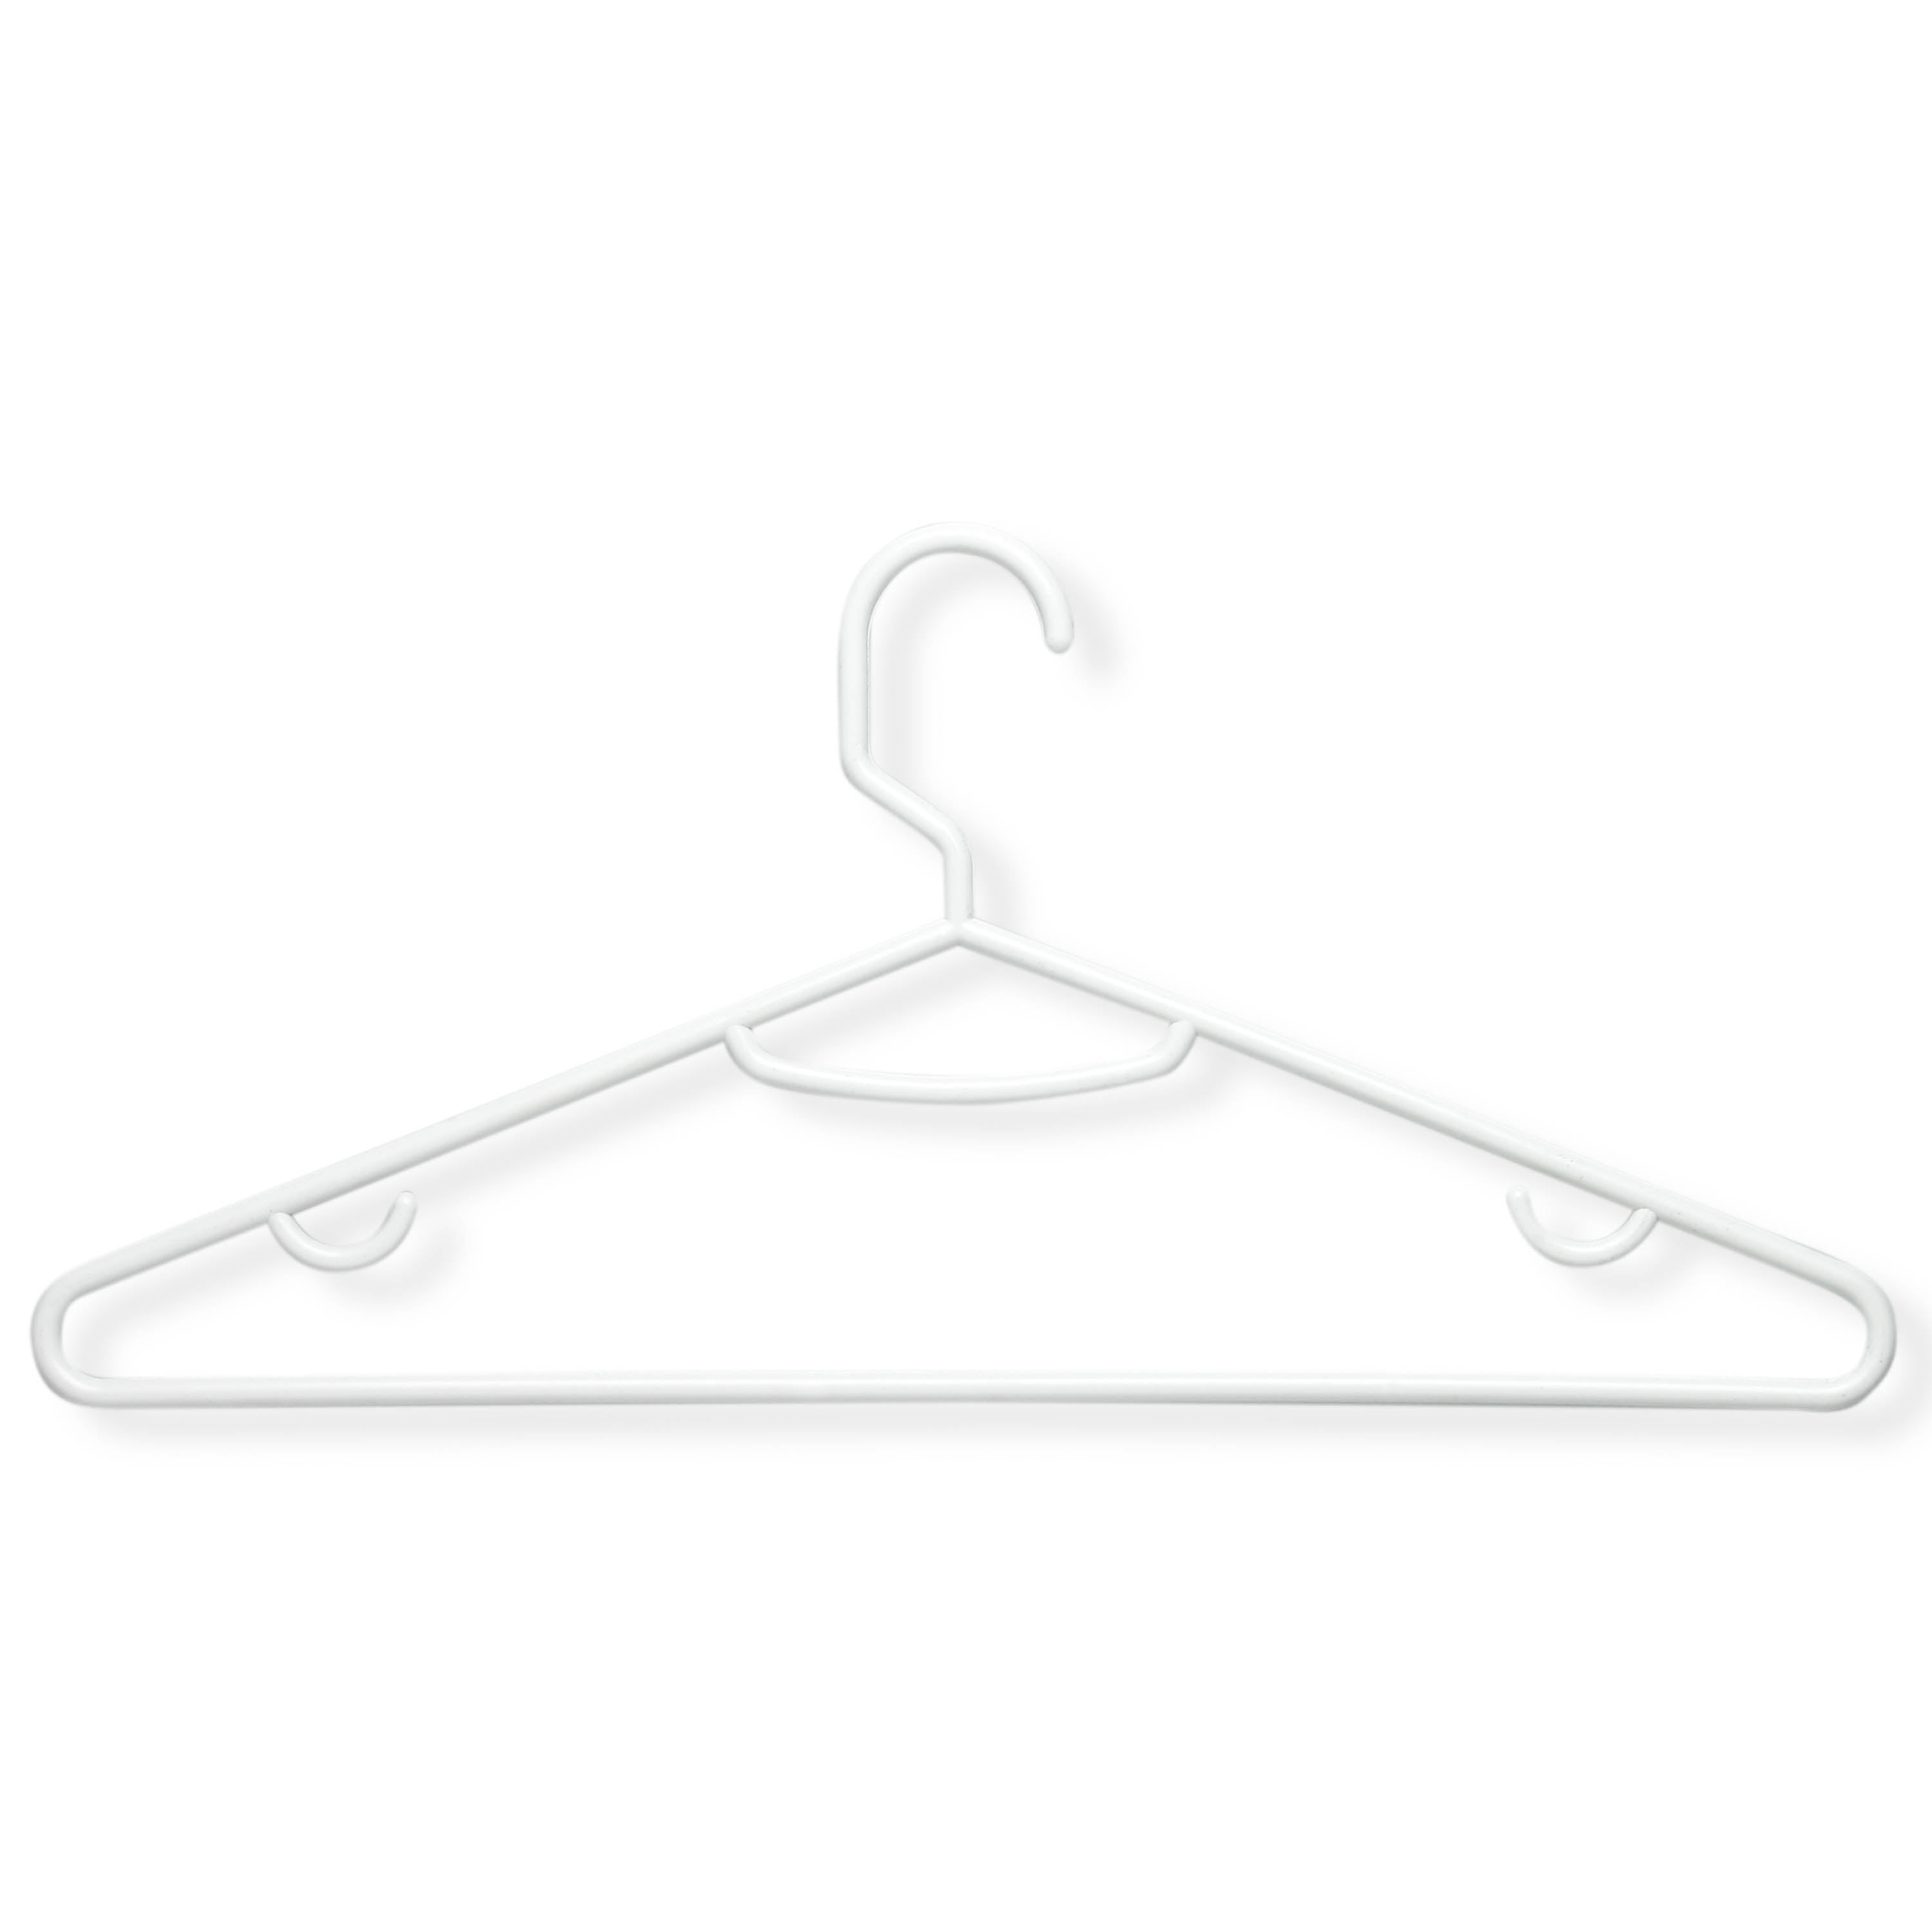 60-pack brilliant white plastic hangers | Walmart Canada